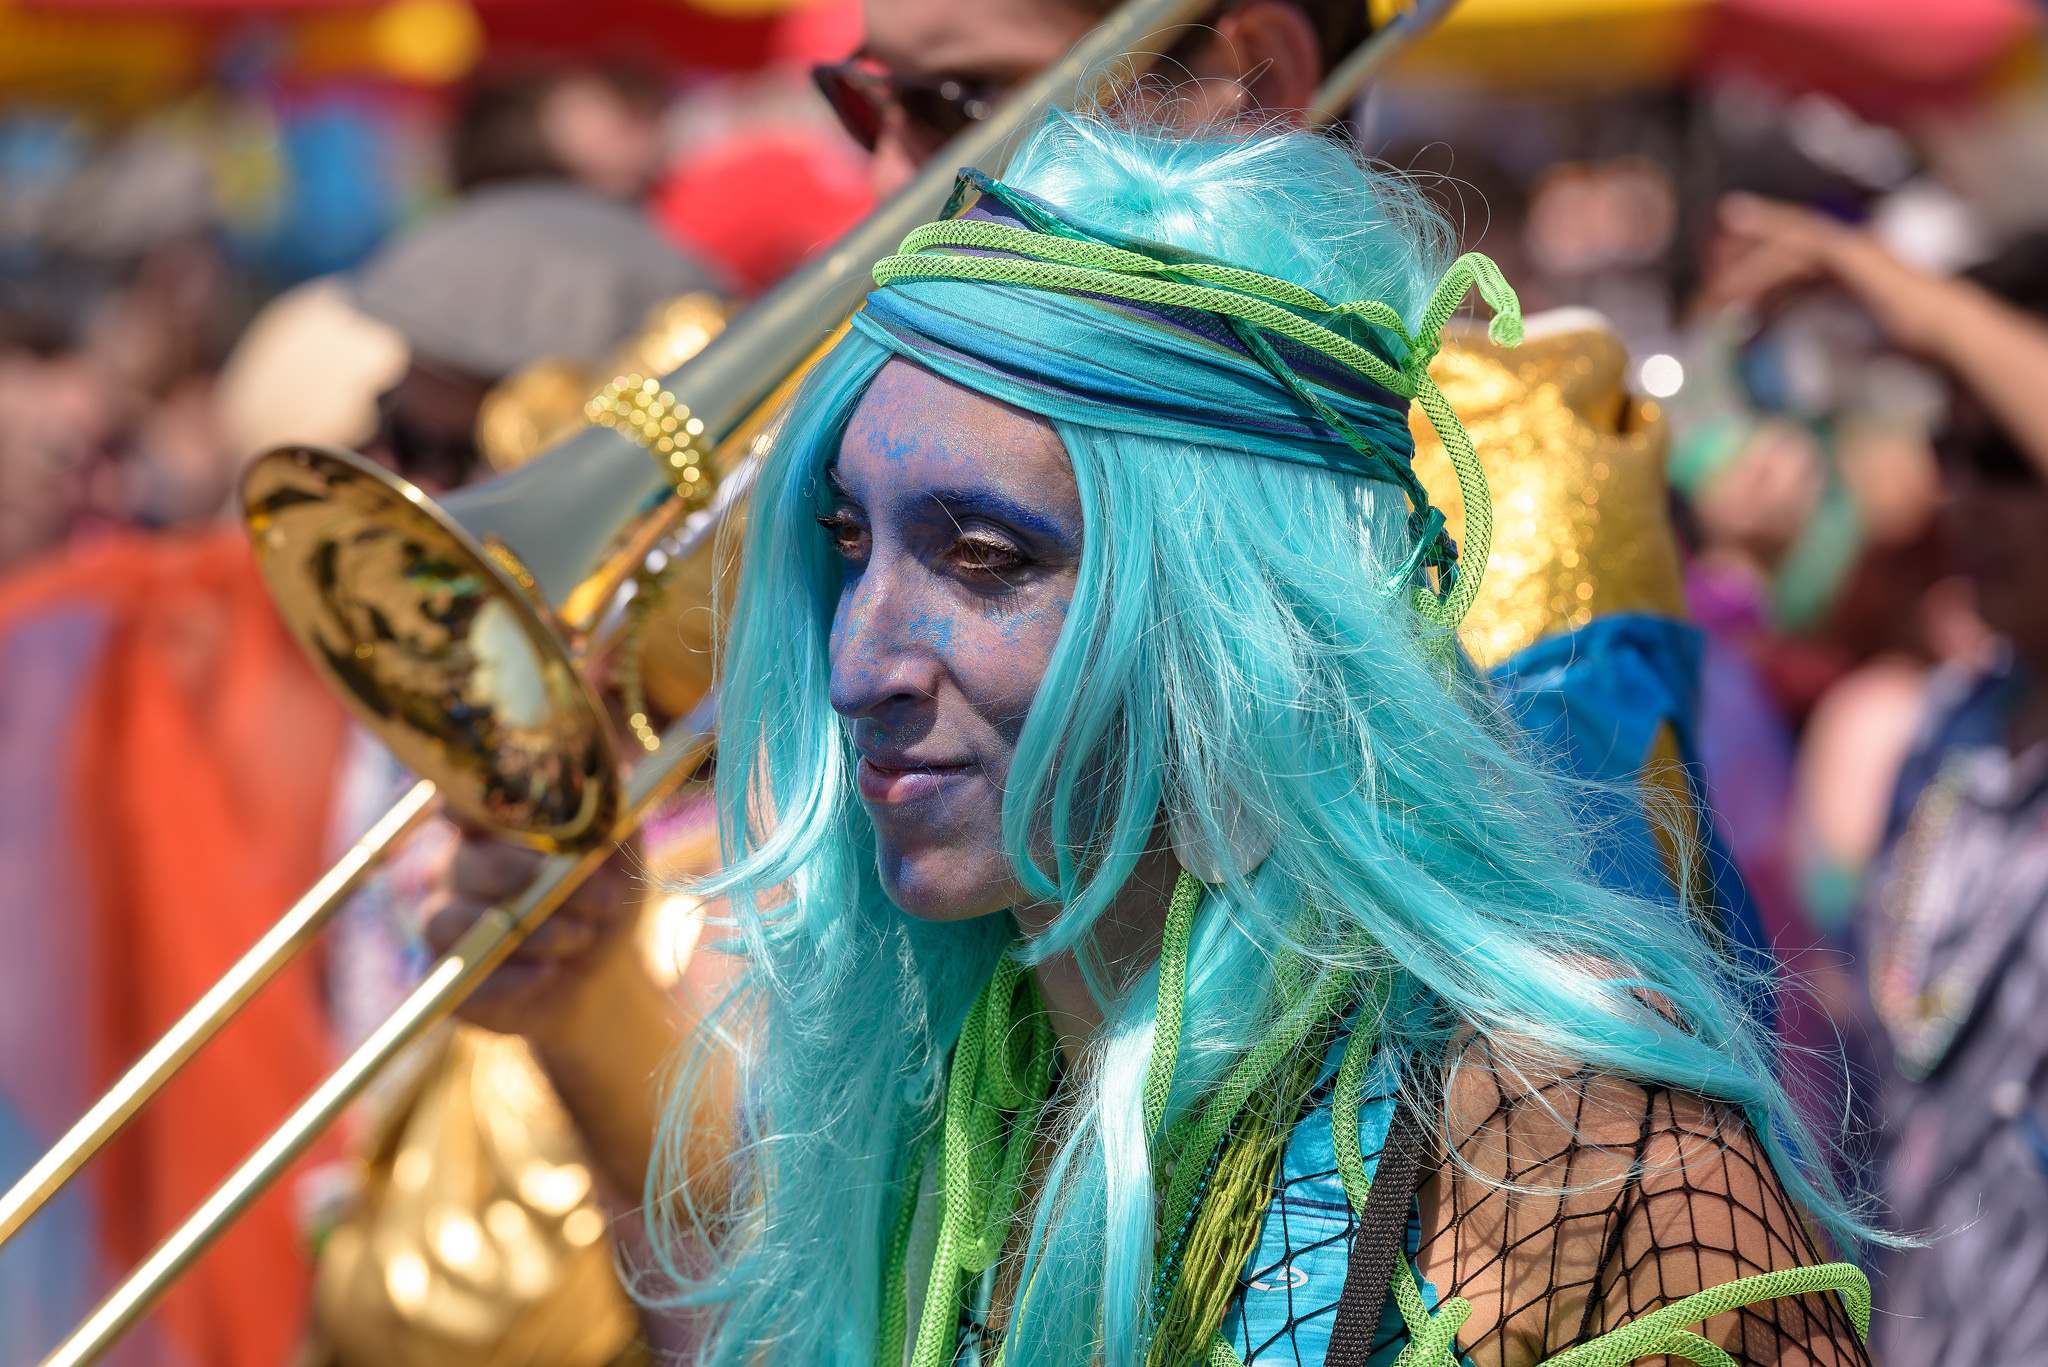 mermaid parade4 2016 Coney Island Mermaid Parade in NYC